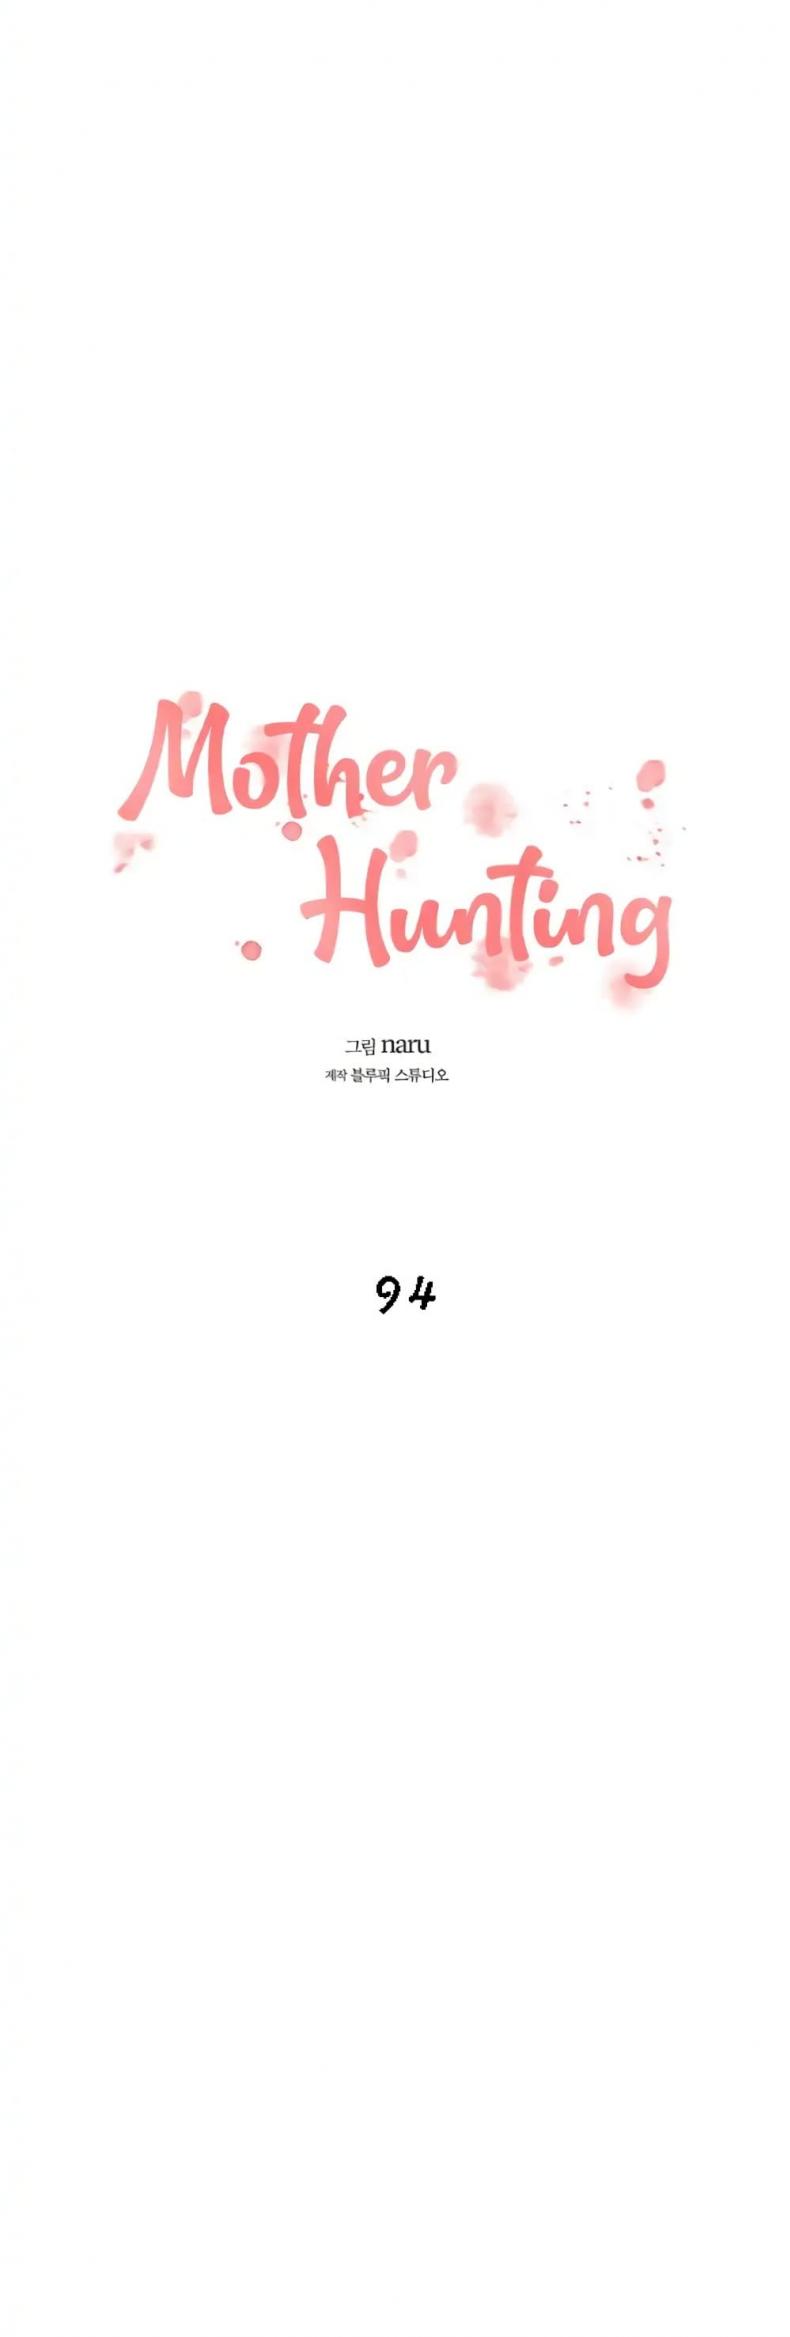 Mother Hunting 94-0 ภาพที่ 1